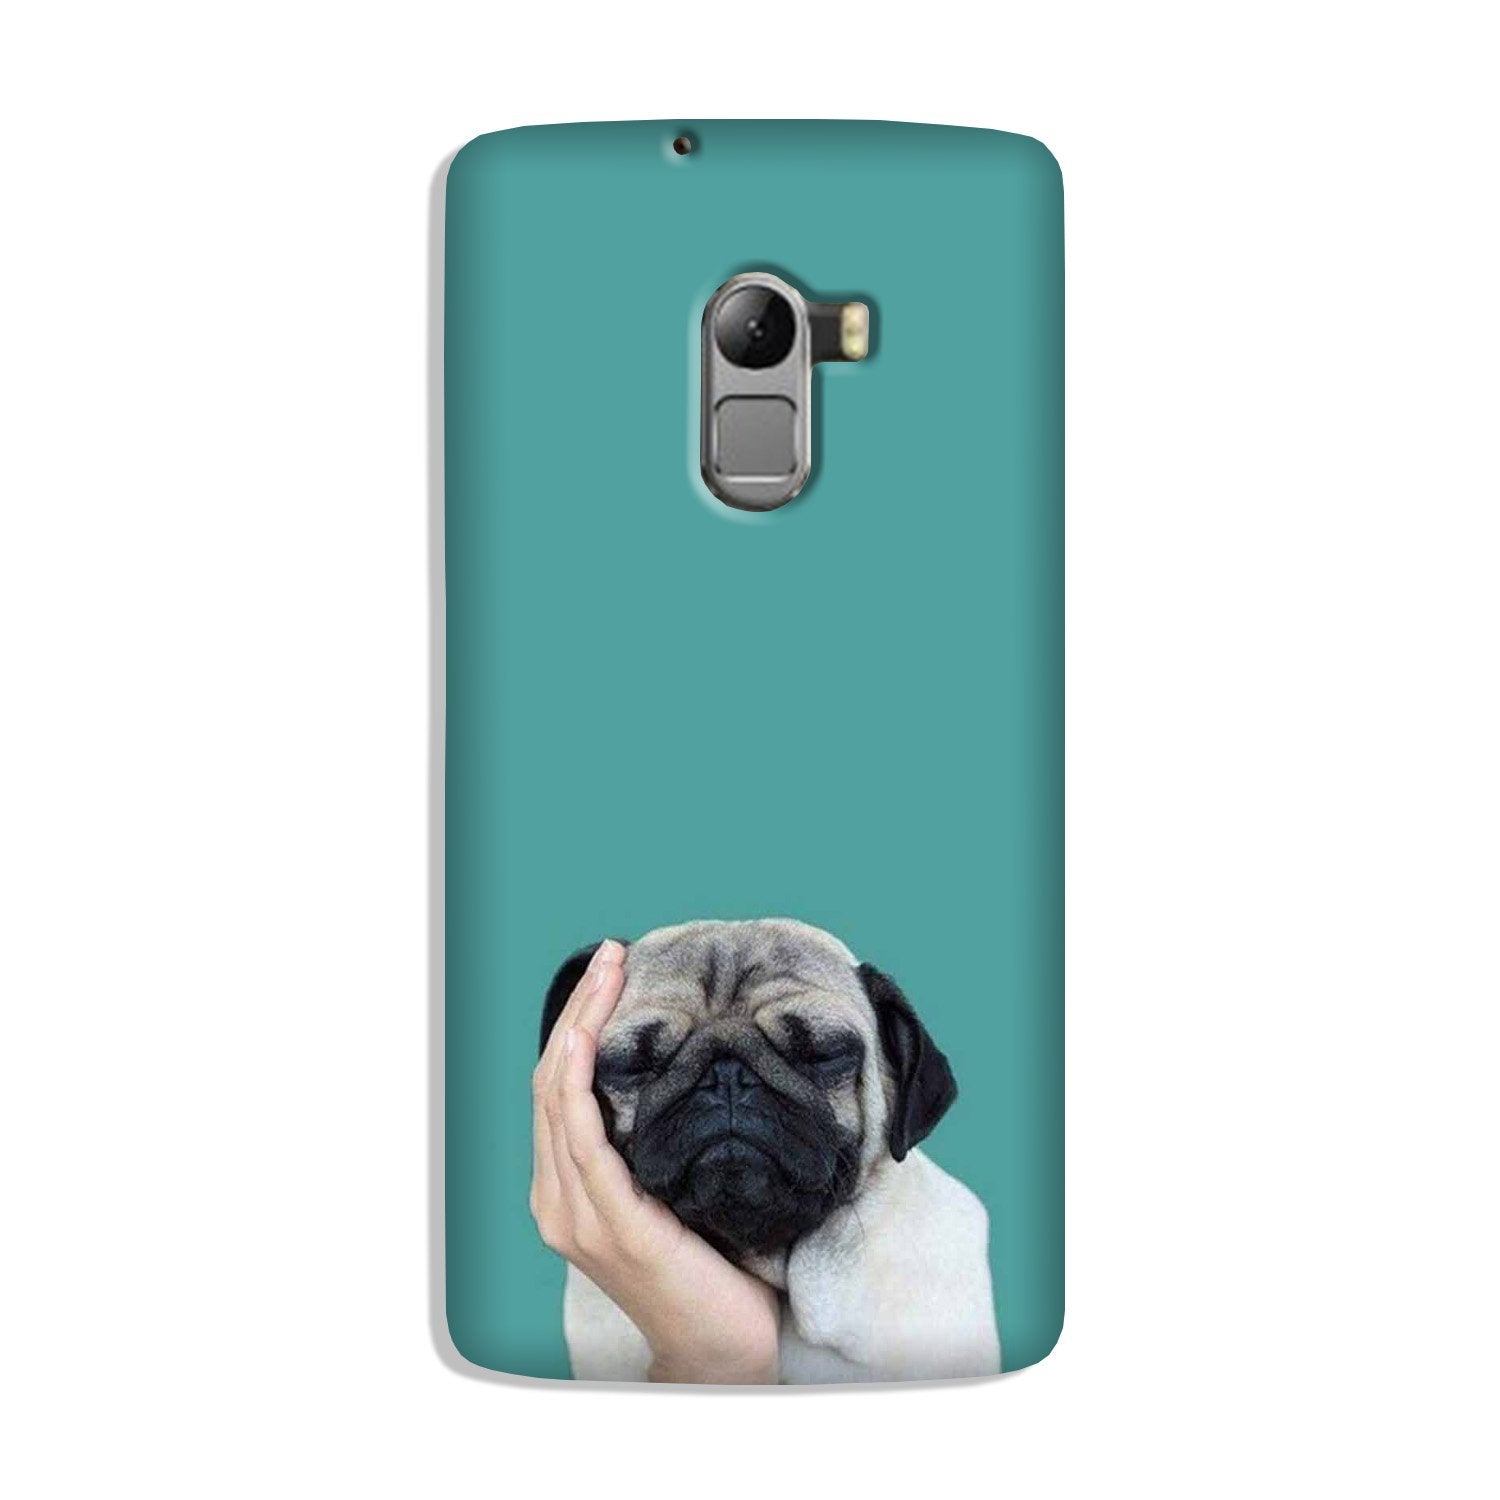 Puppy Mobile Back Case for Lenovo K4 Note (Design - 333)